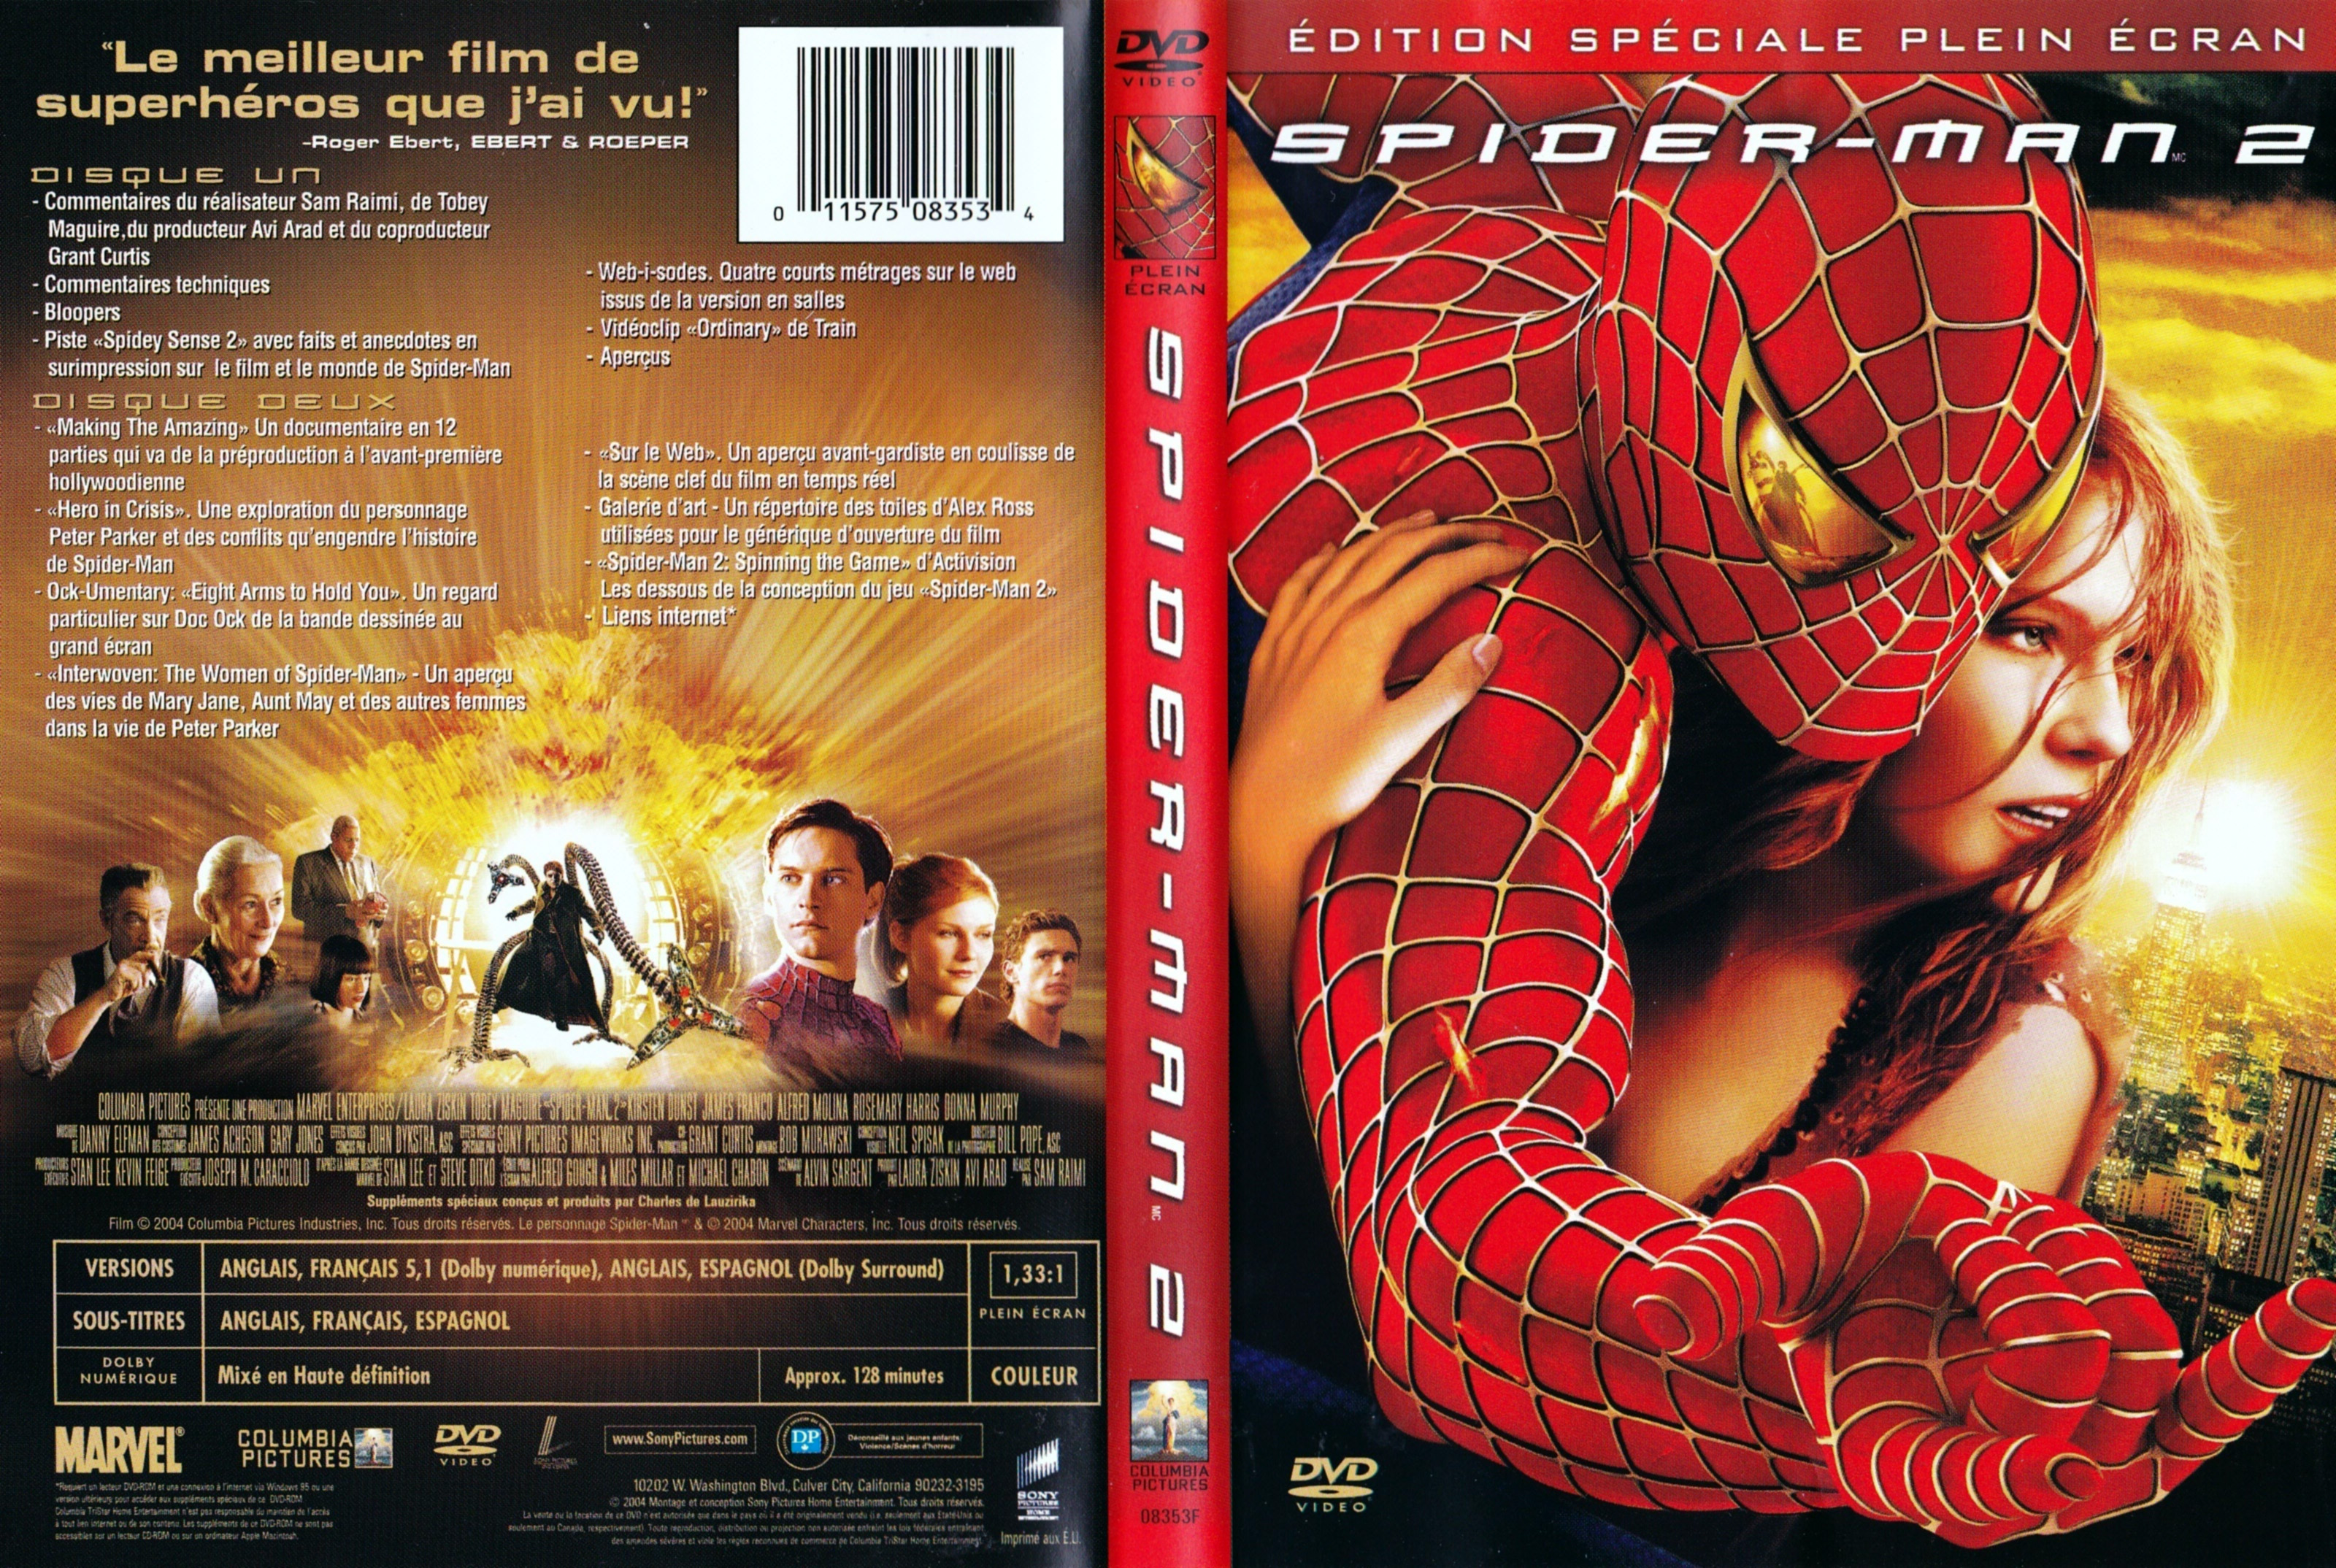 Jaquette DVD Spiderman 2 (Canadienne)